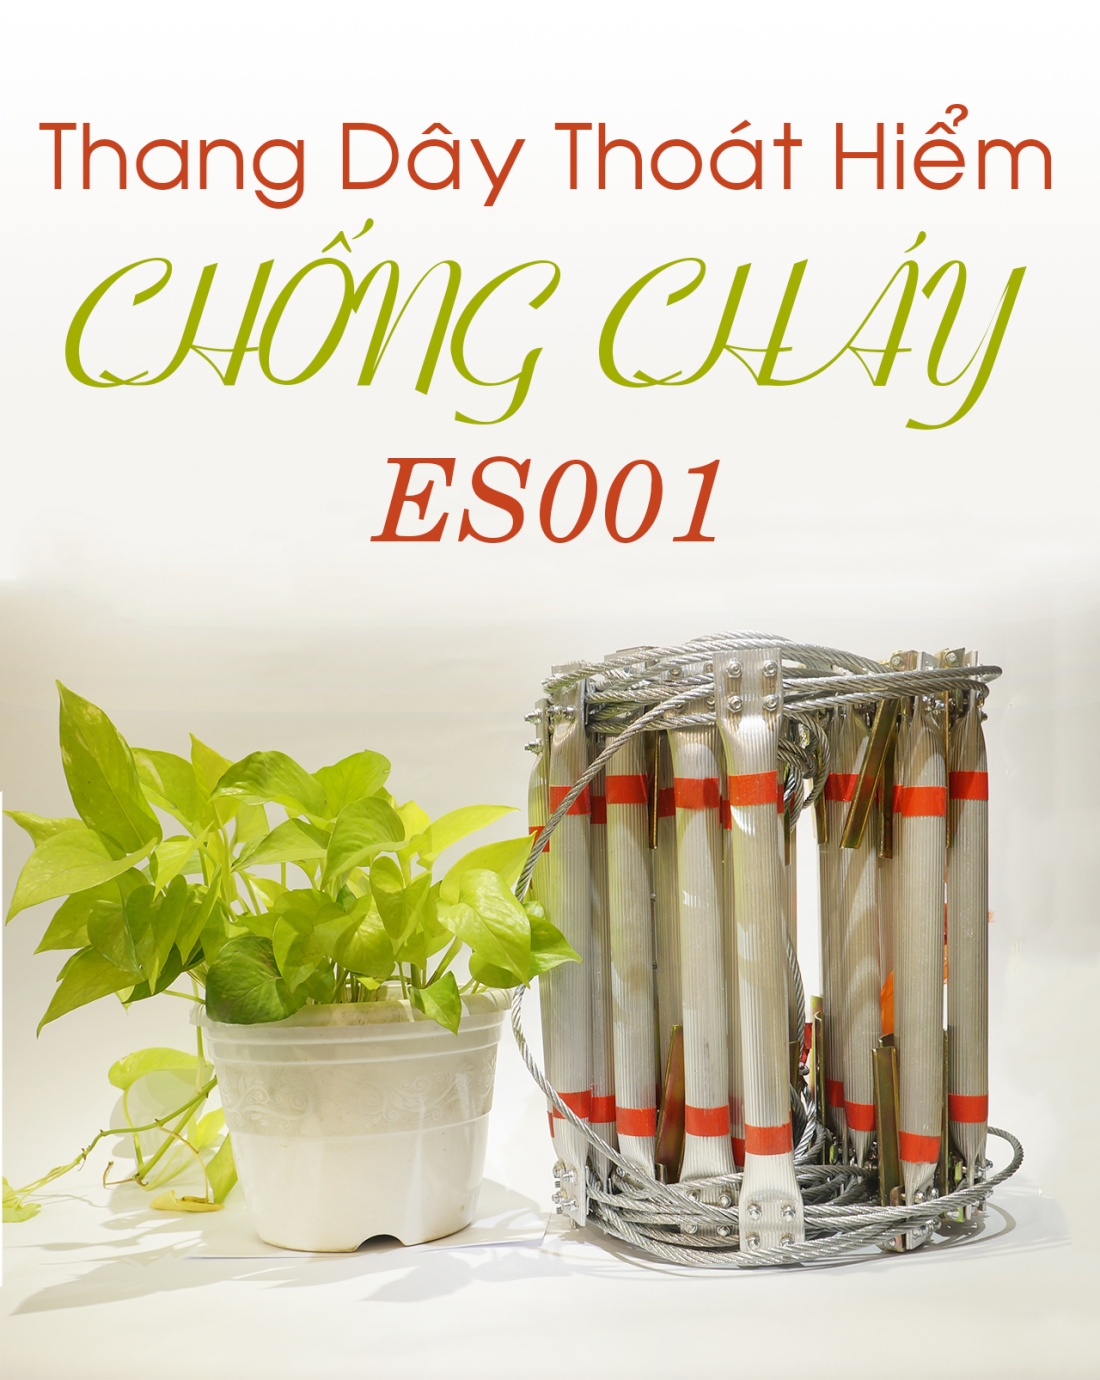 thang-day-thoat-hiem-chong-chay-es001.jpg